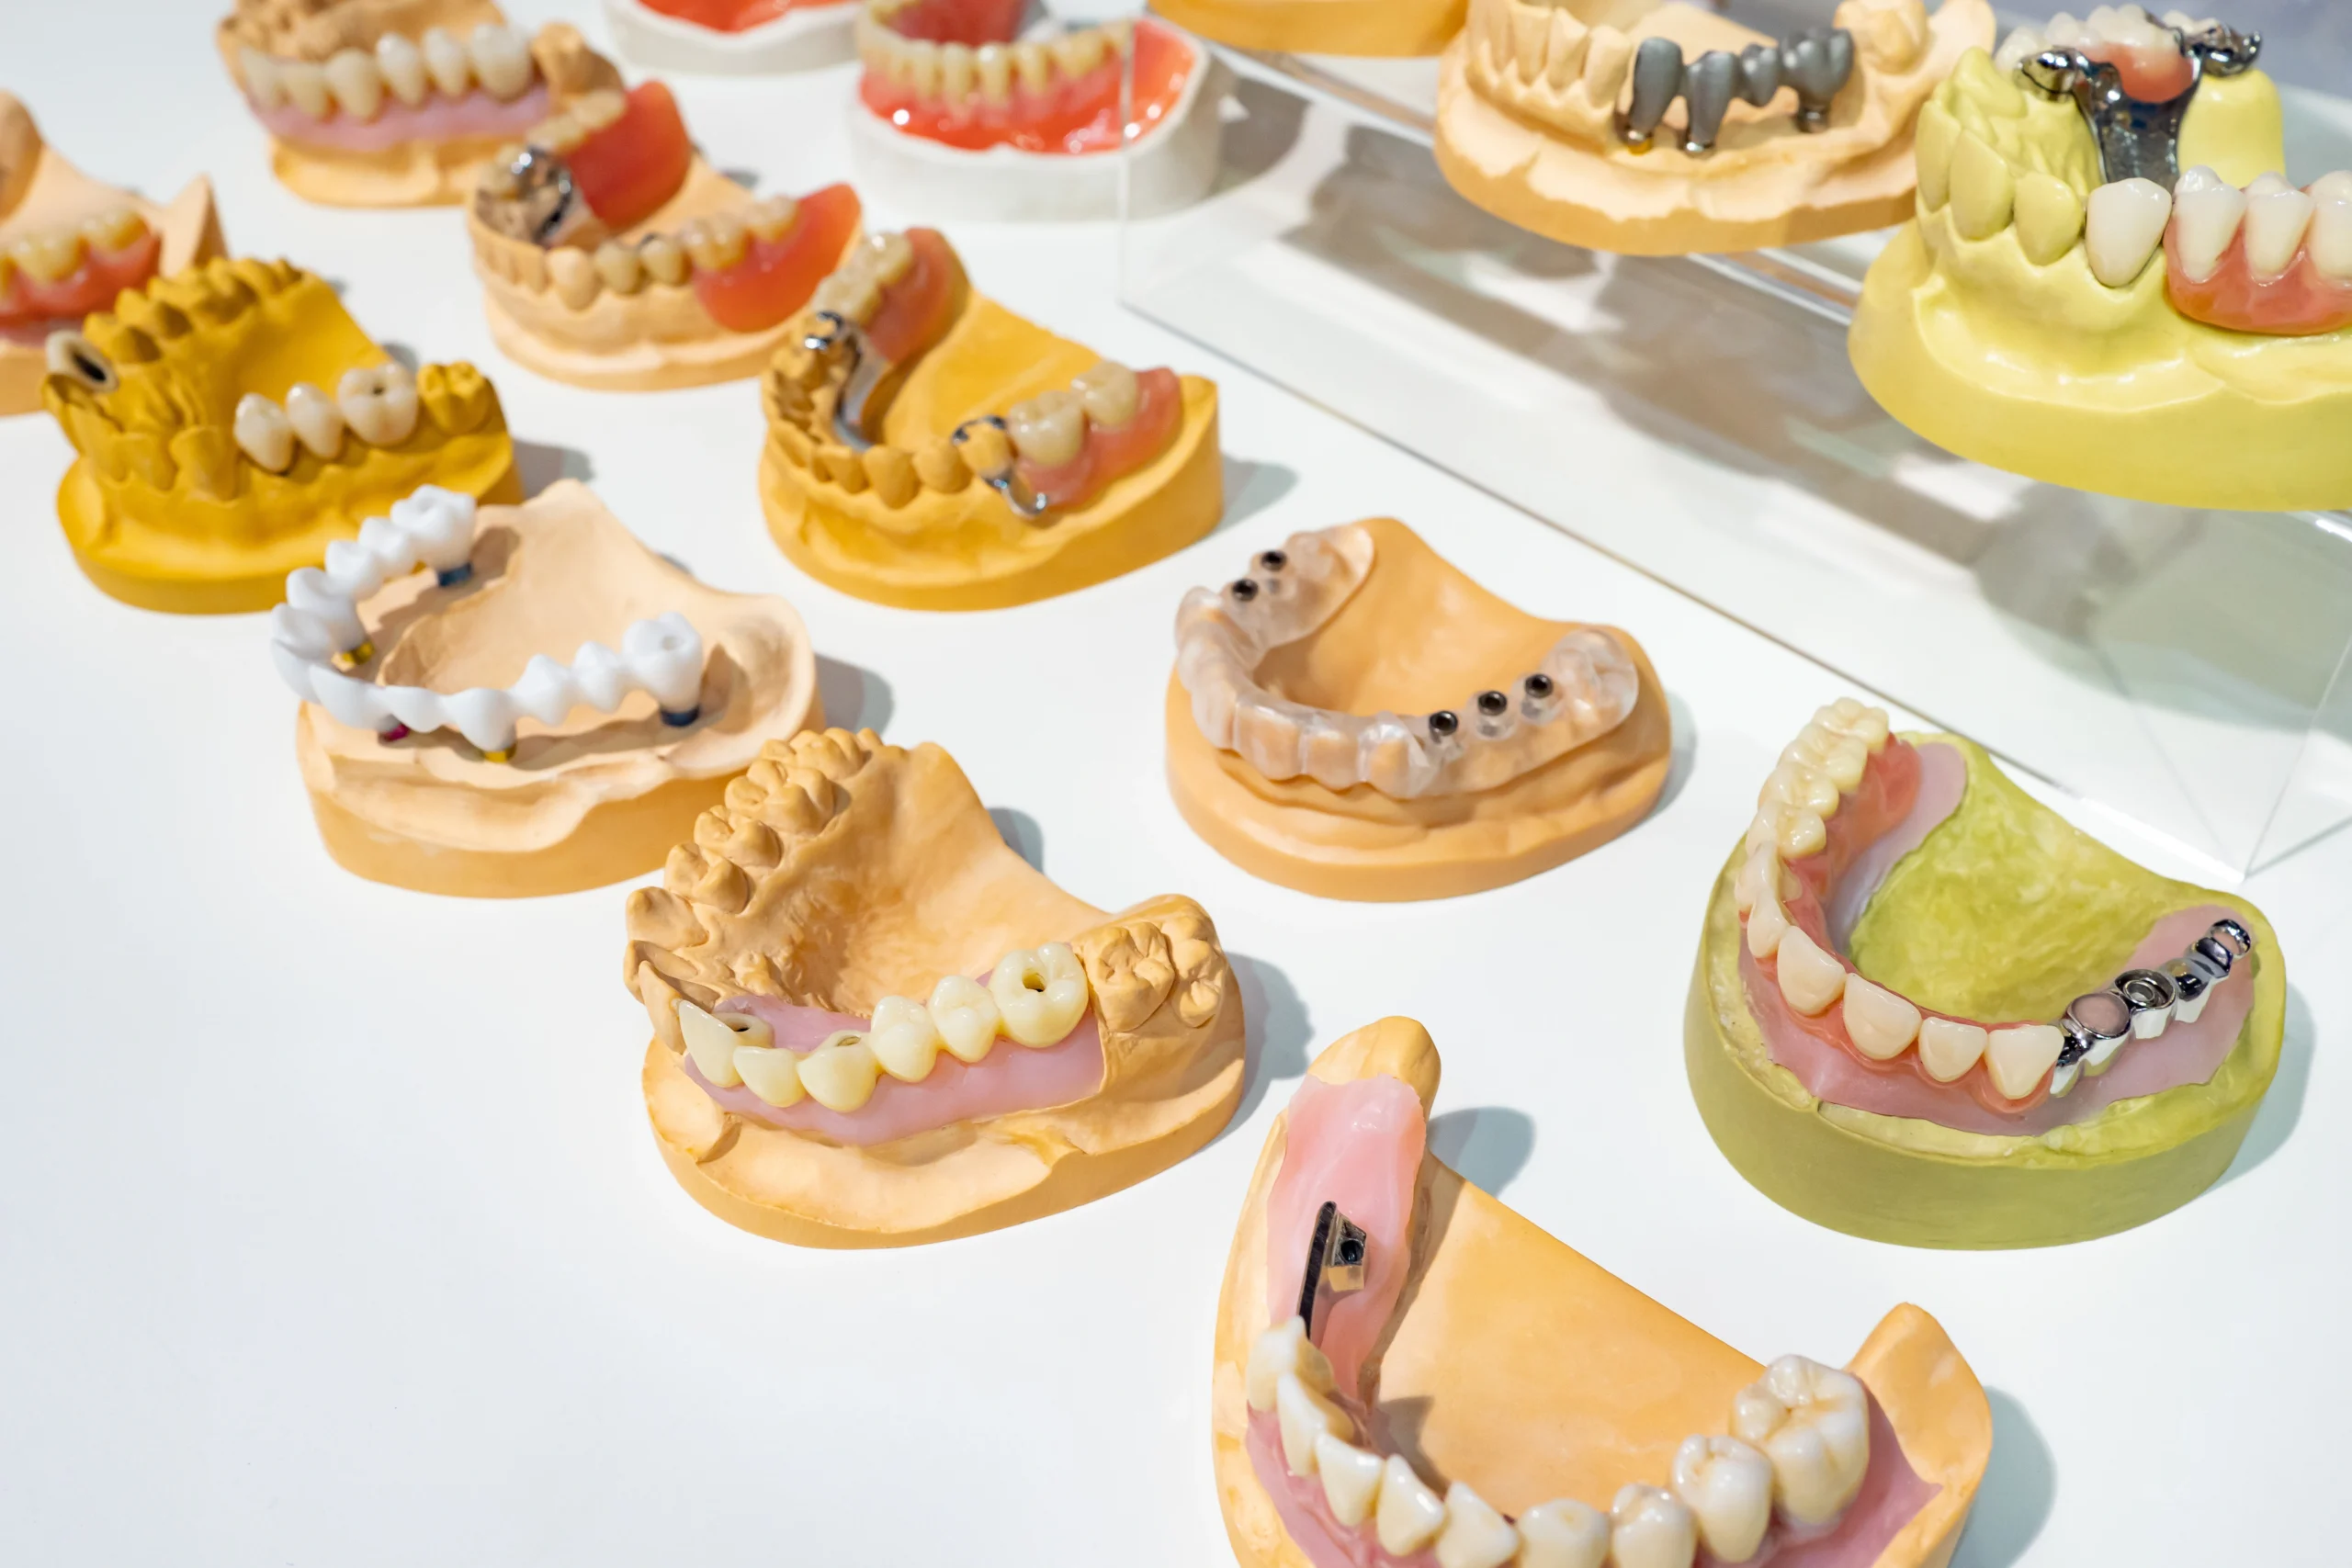 Precious metal dental crowns in production